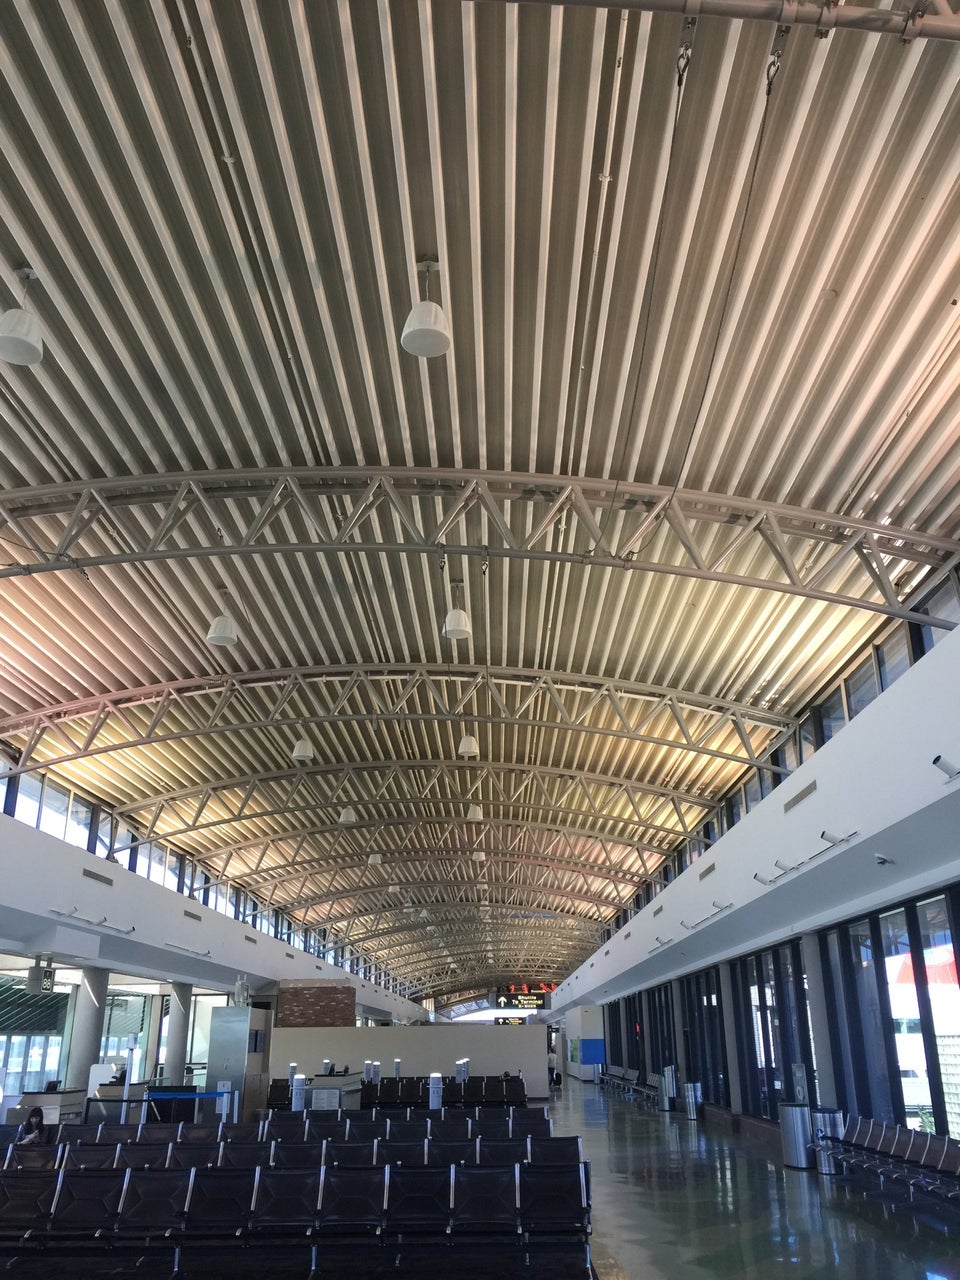 Photo of Tampa International Airport